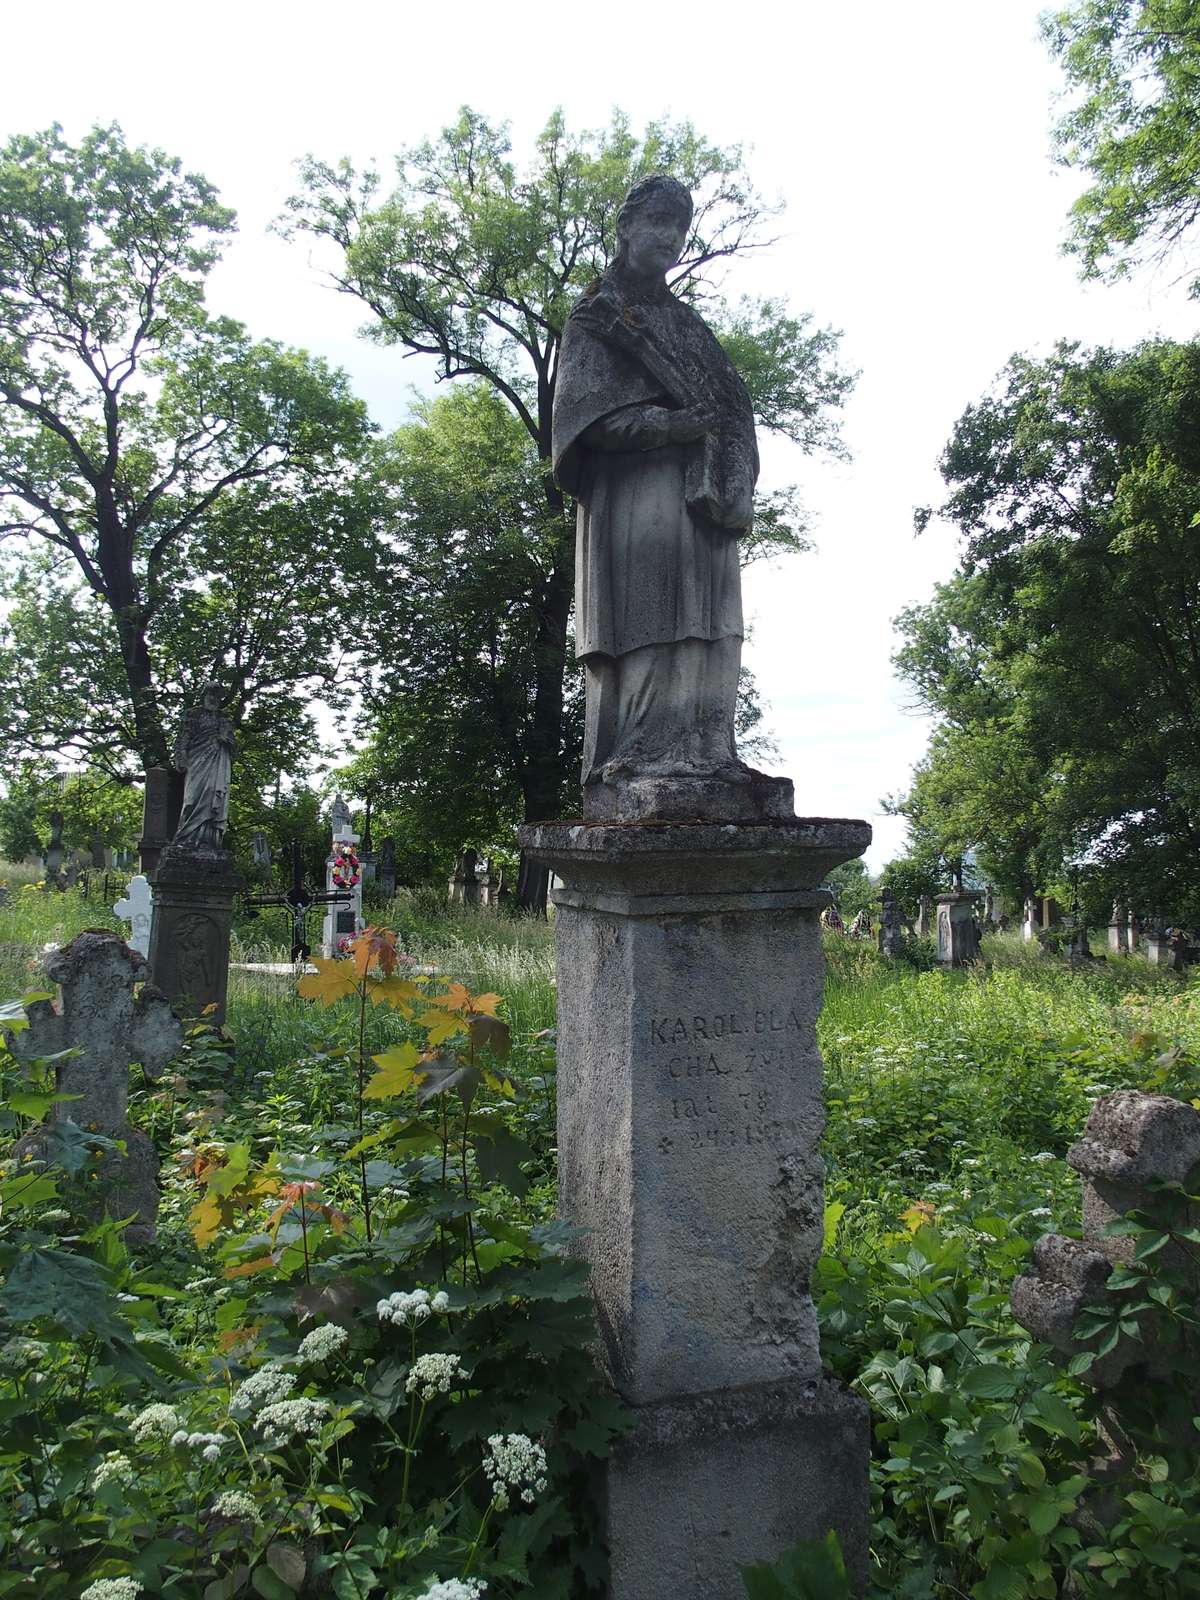 Tombstone of Karol Blacha, Zbarazh cemetery, as of 2018.